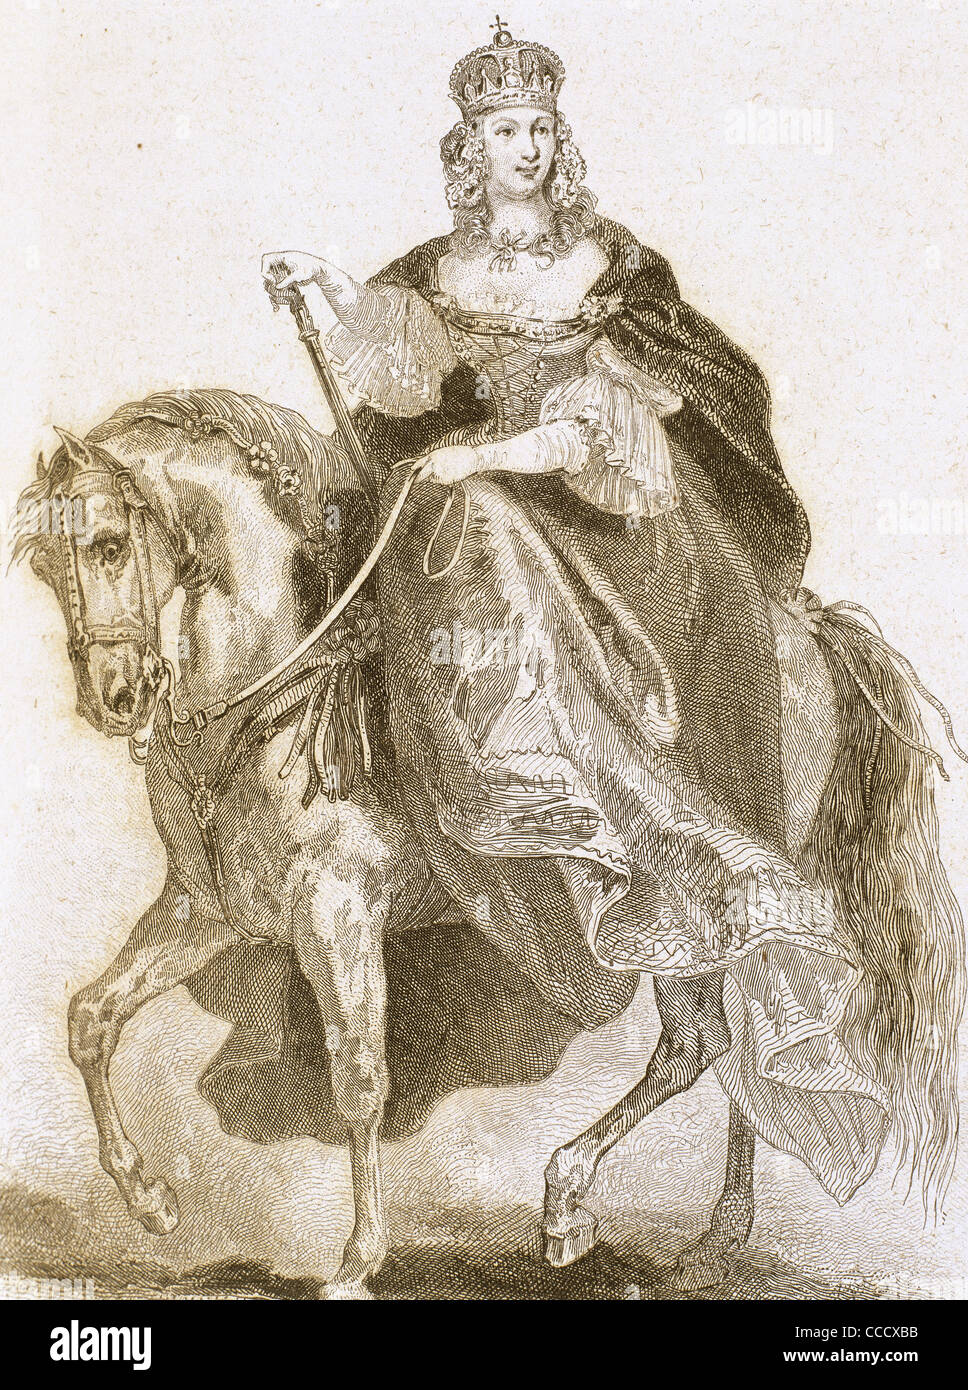 Maria Theresa (1717-1780). Empress of the Holy Roman Empire. Portrait. Engraving. Stock Photo